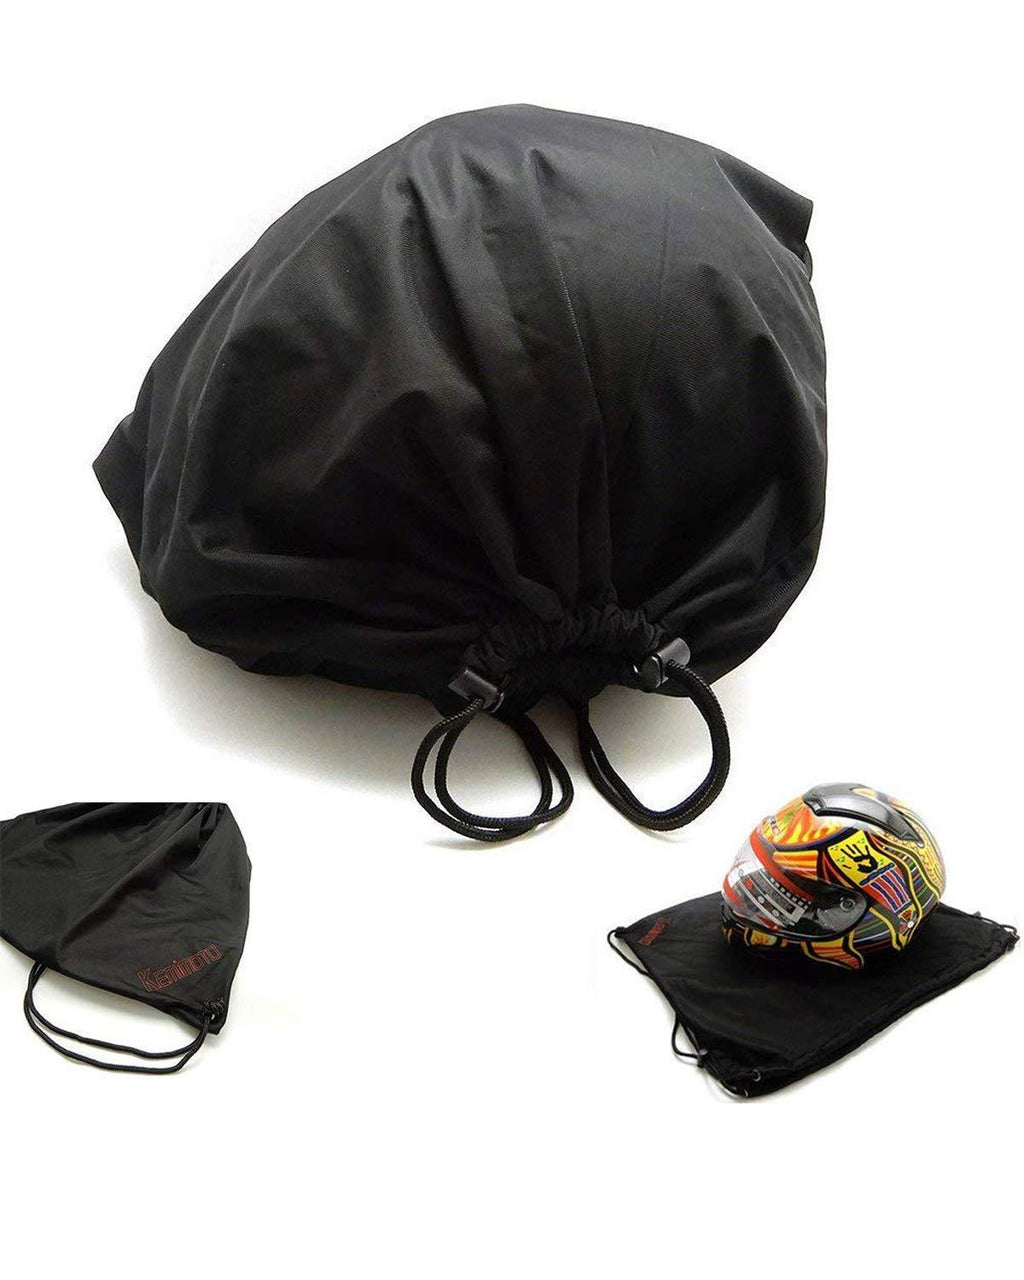  [AUSTRALIA] - kemimoto Helmet Backpack, Multi-purpose Drawstring Bag, Anti-dust, Lightweight Storage Bag for Motorcycle Sport Gym Training Hiking Travel Bags, Special Gift